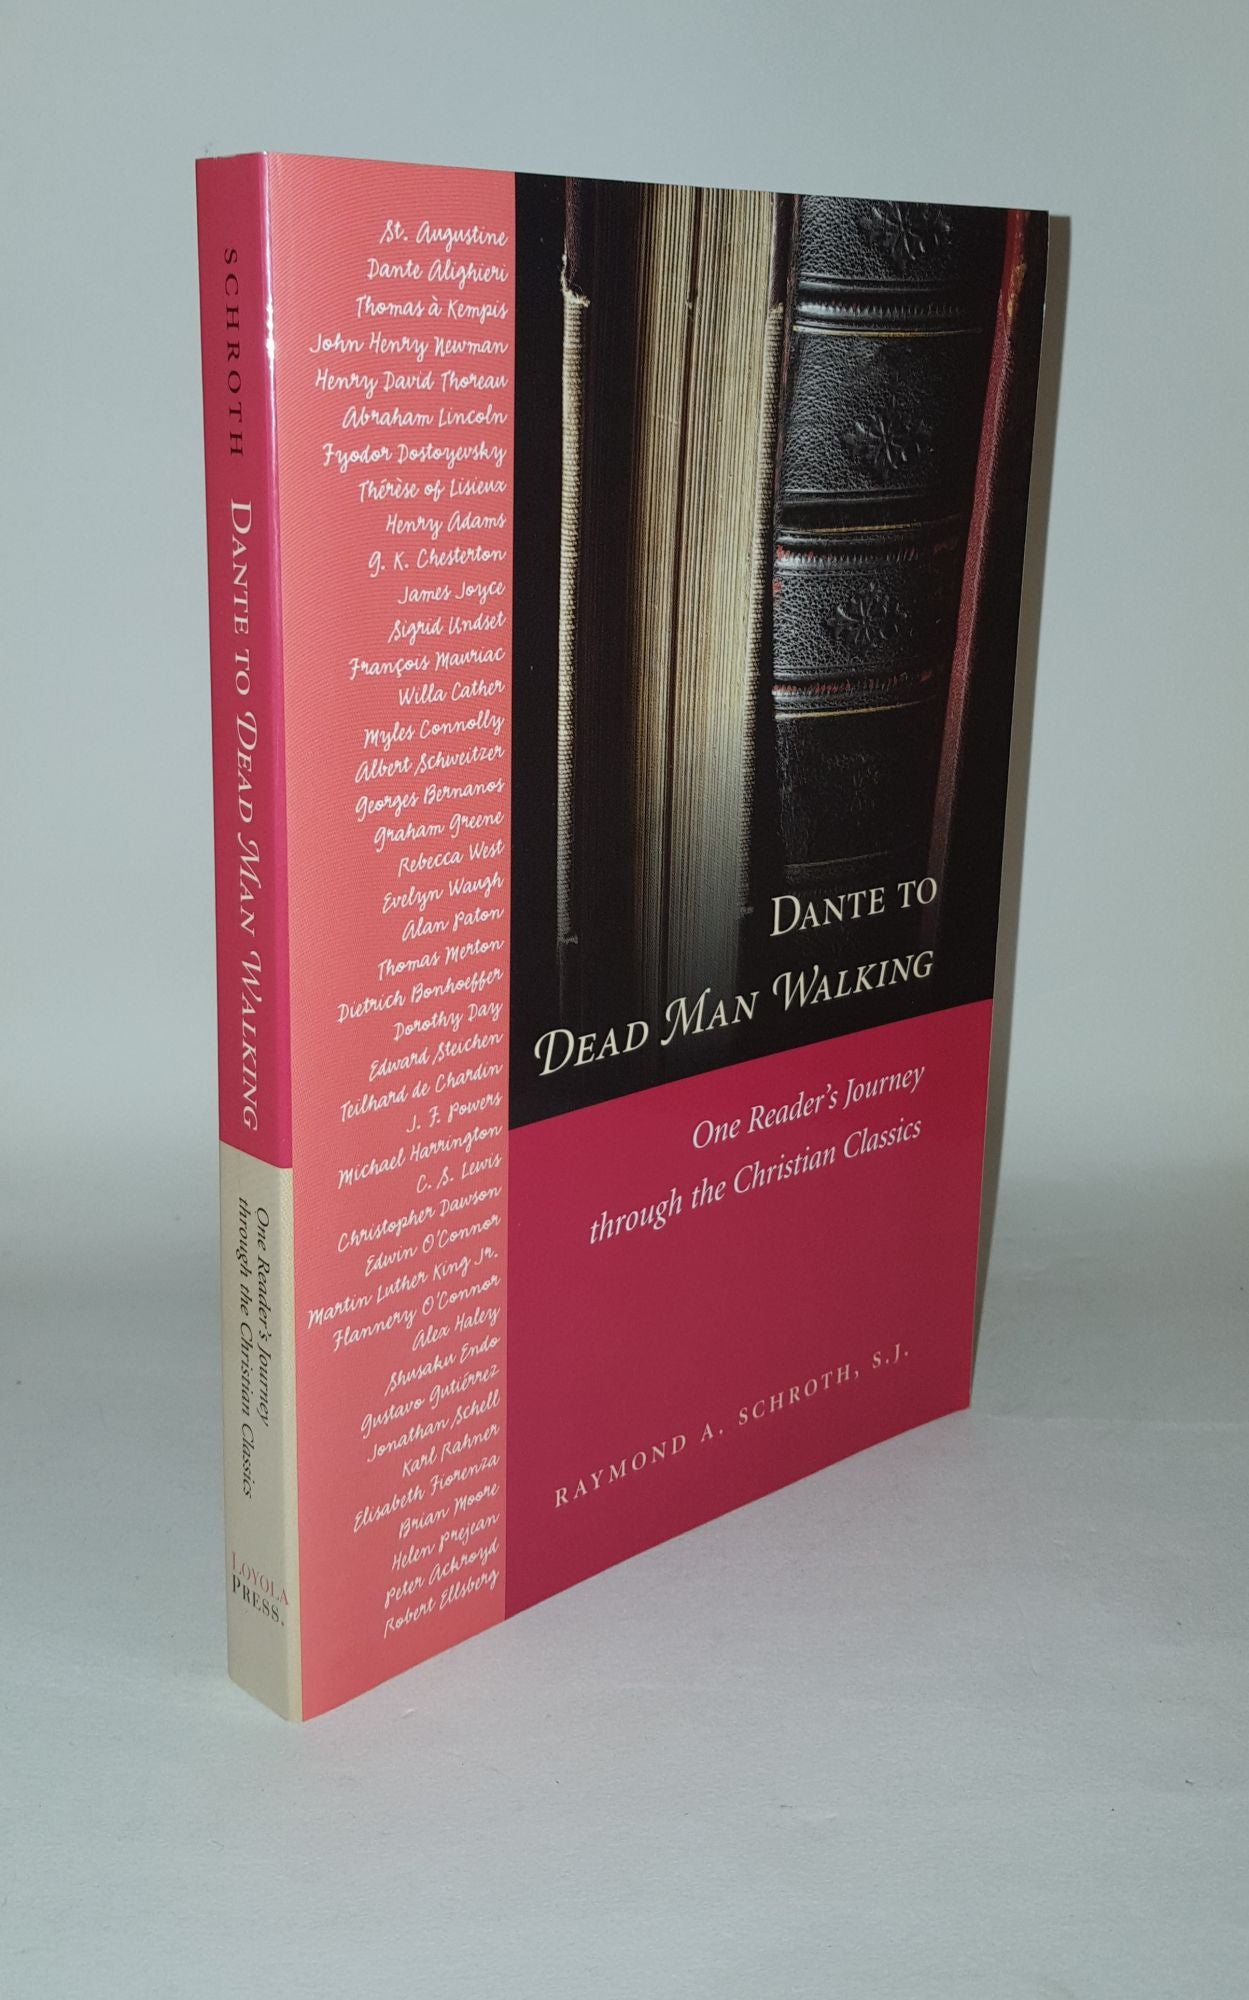 SCHROTH Raymond A. - Dante to Dead Man Walking One Reader's Journey Through the Christian Classics